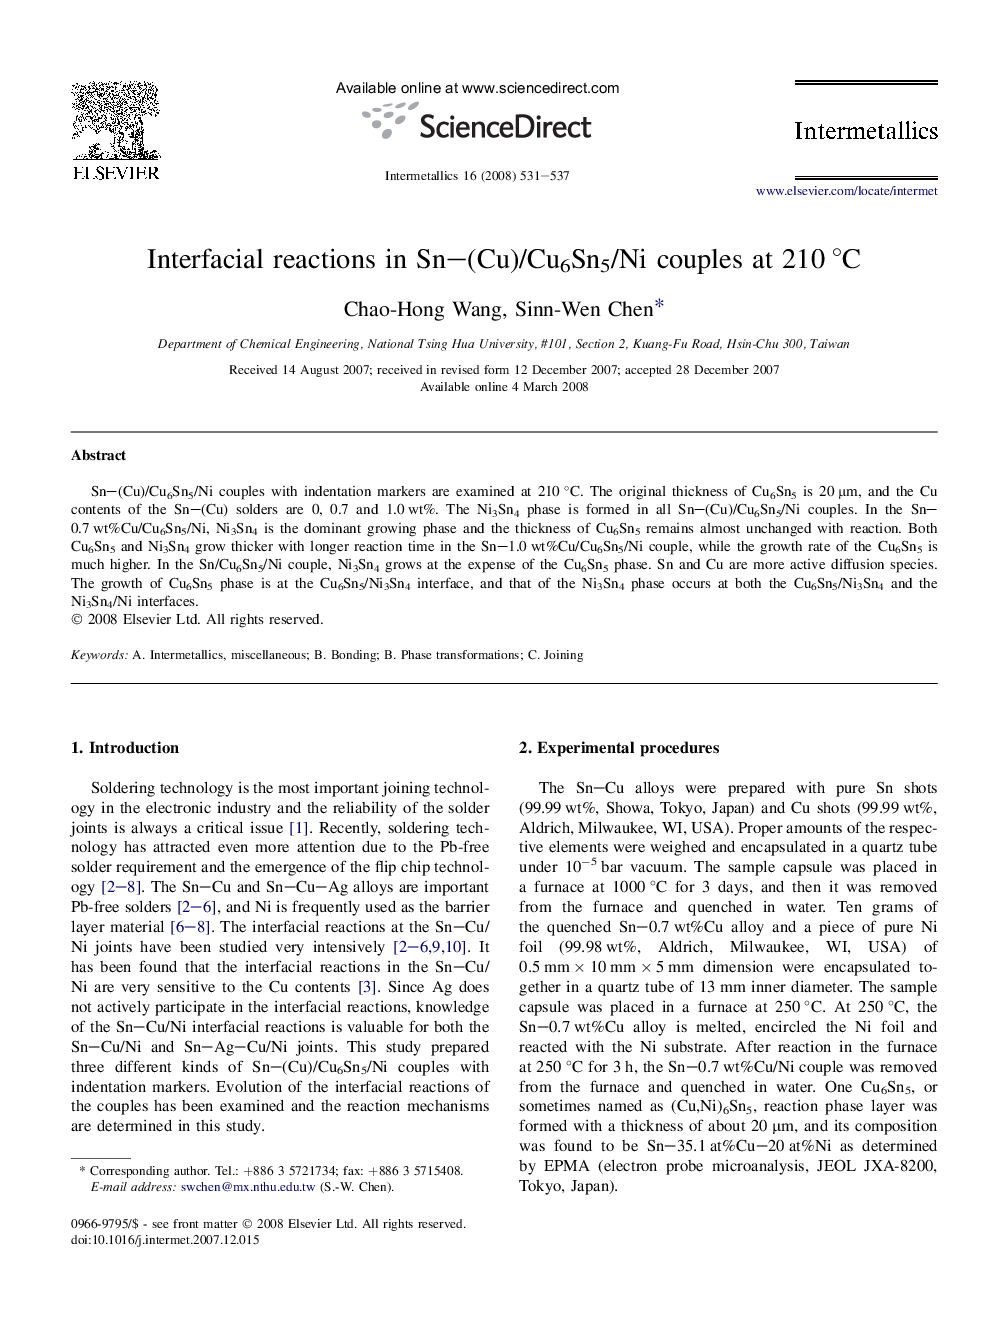 Interfacial reactions in Sn-(Cu)/Cu6Sn5/Ni couples at 210Â Â°C